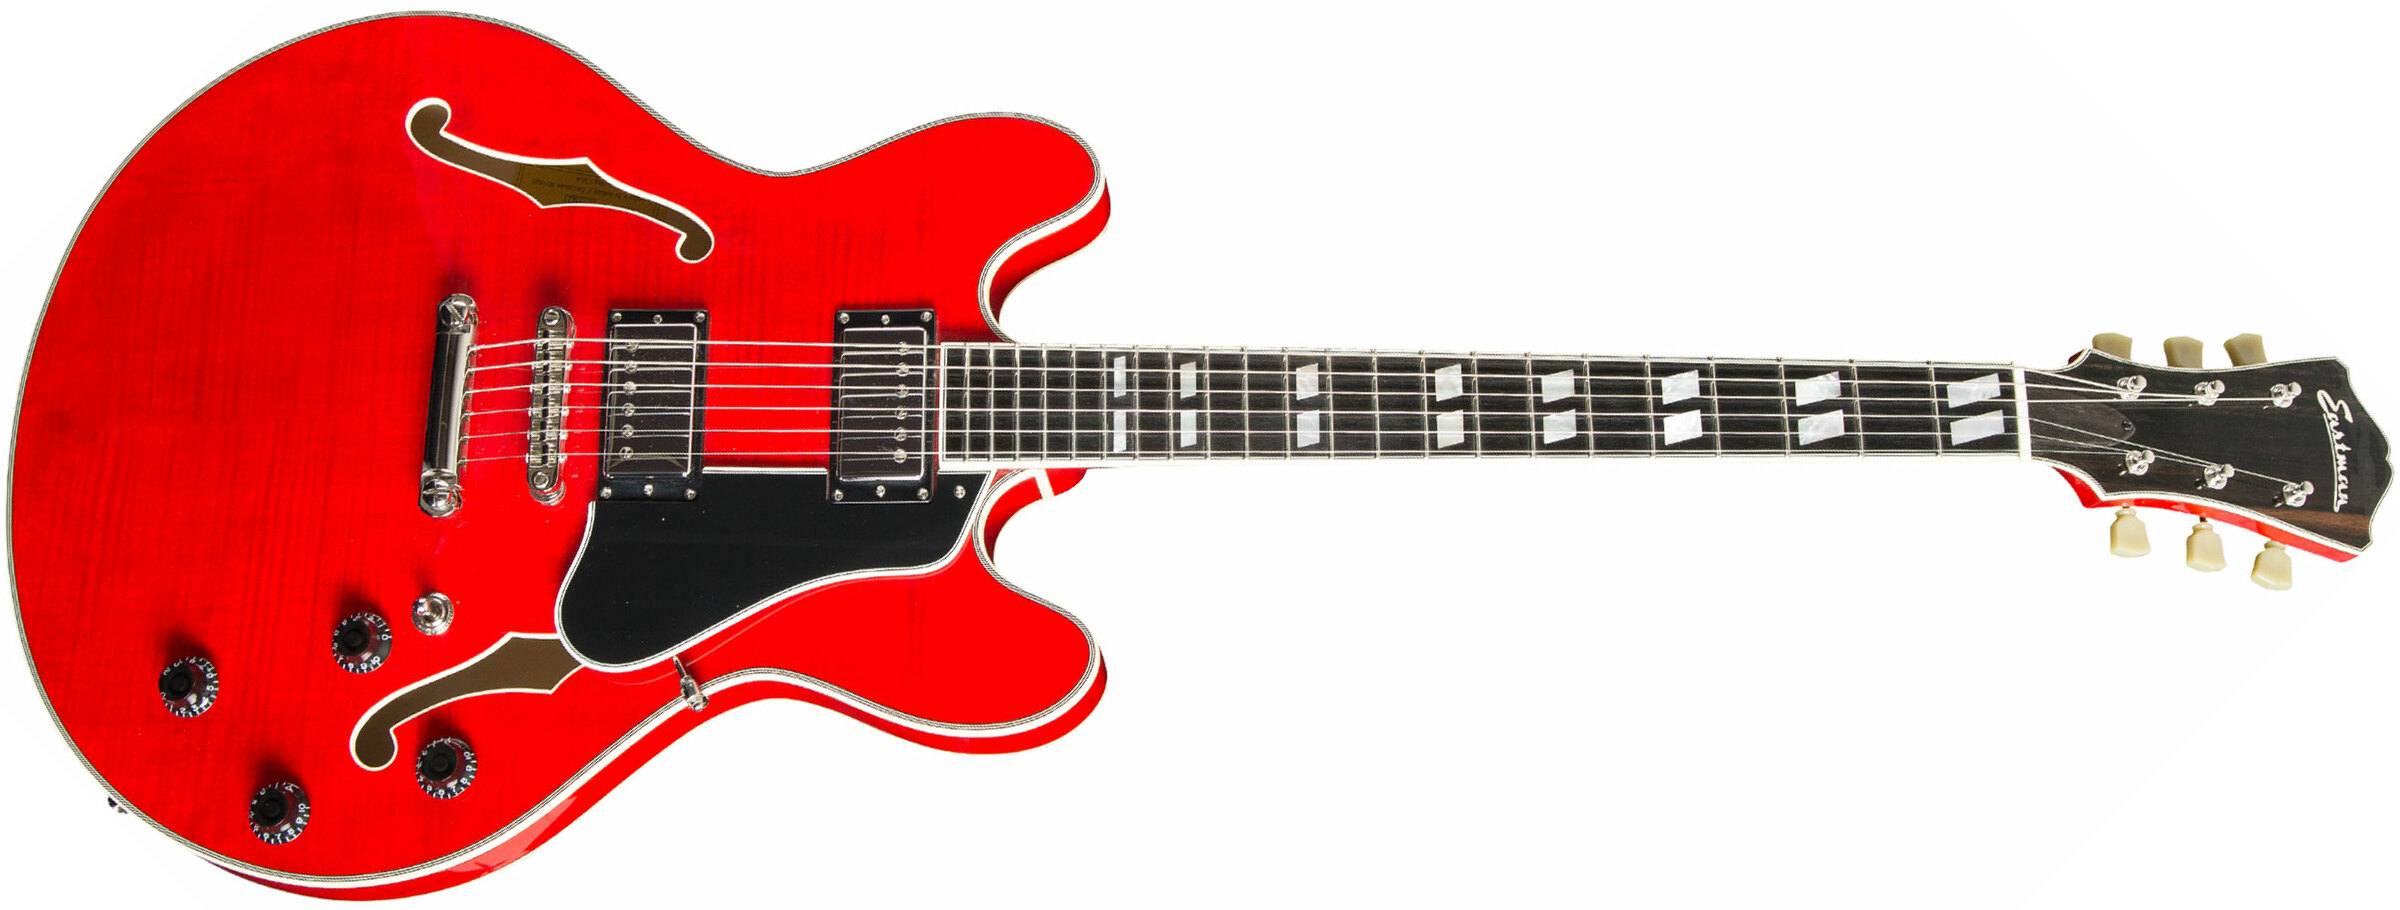 Eastman T486 Thinline Laminate Tout Erable Hh Seymour Duncan Ht Eb - Red - Semi hollow elektriche gitaar - Main picture